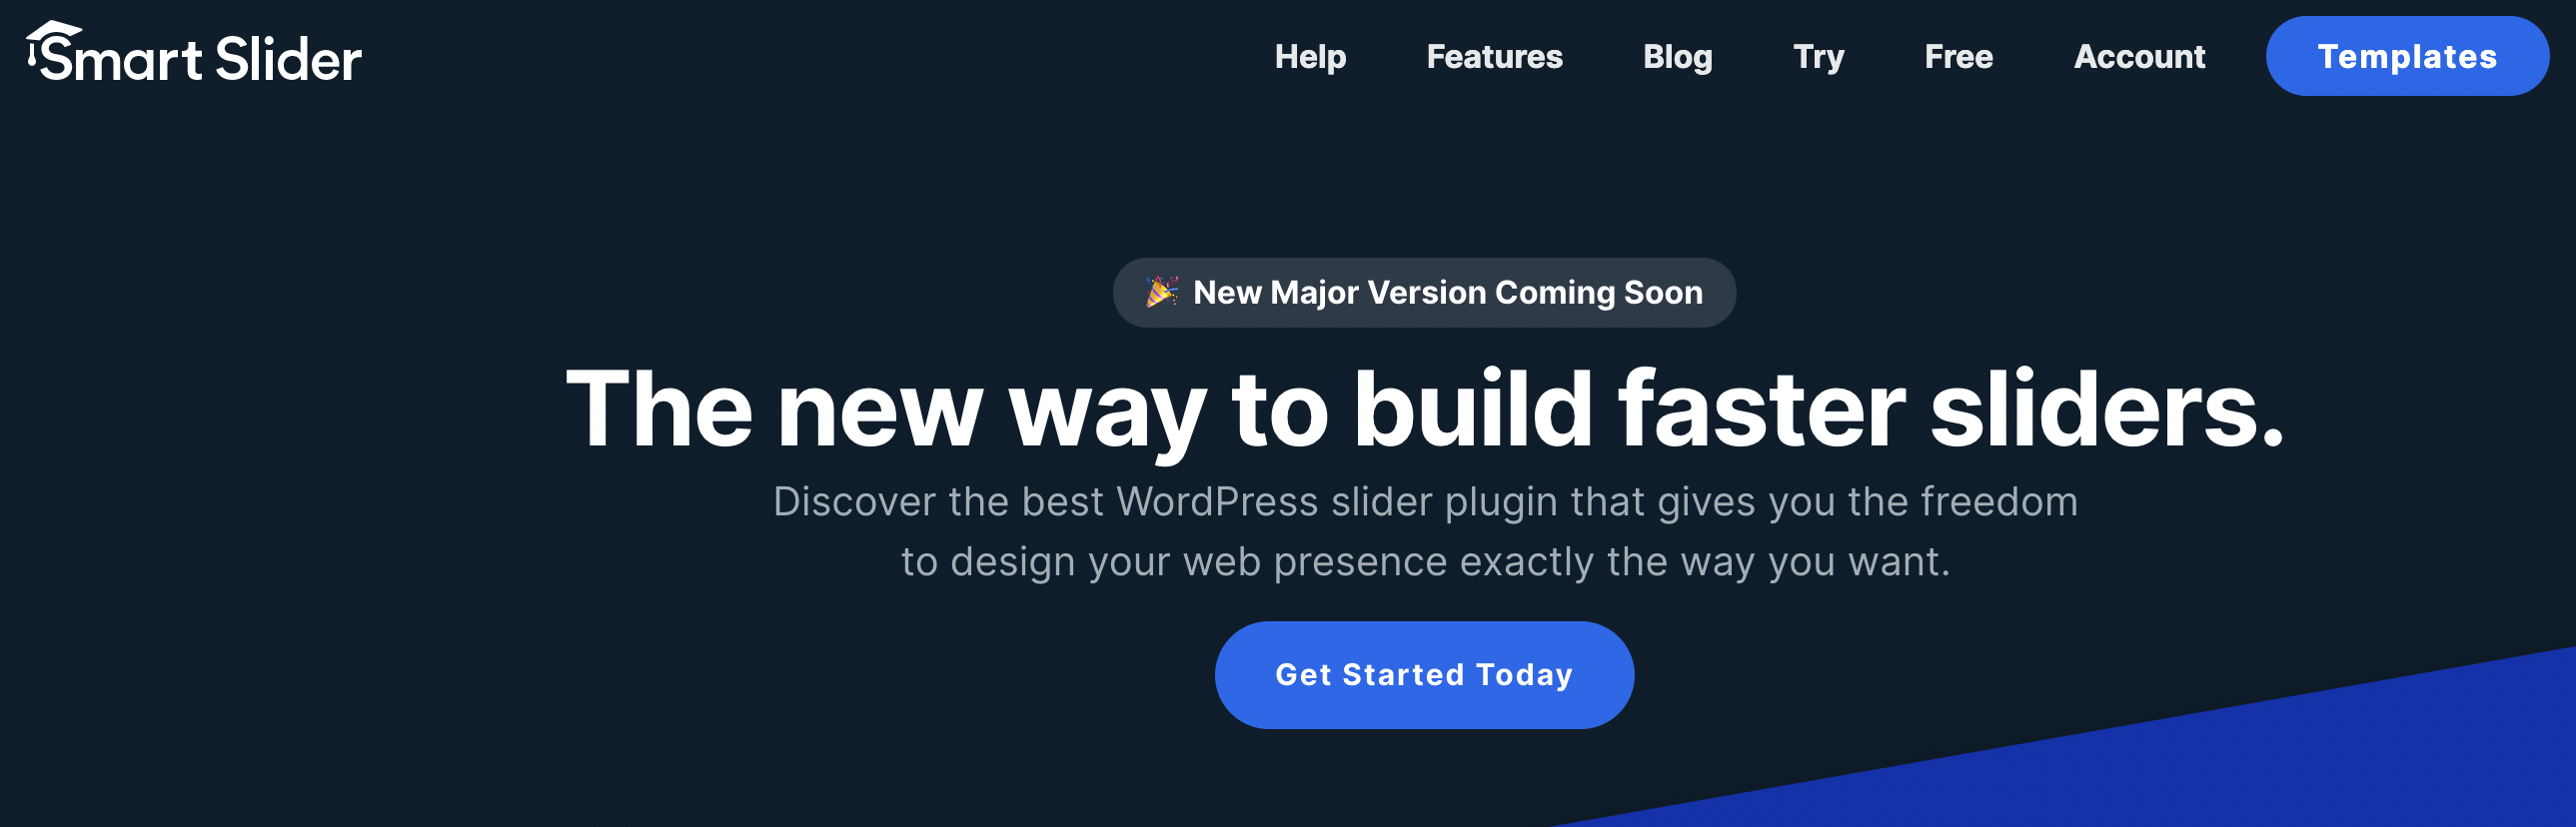 smart slider 3 free wordpress plugin